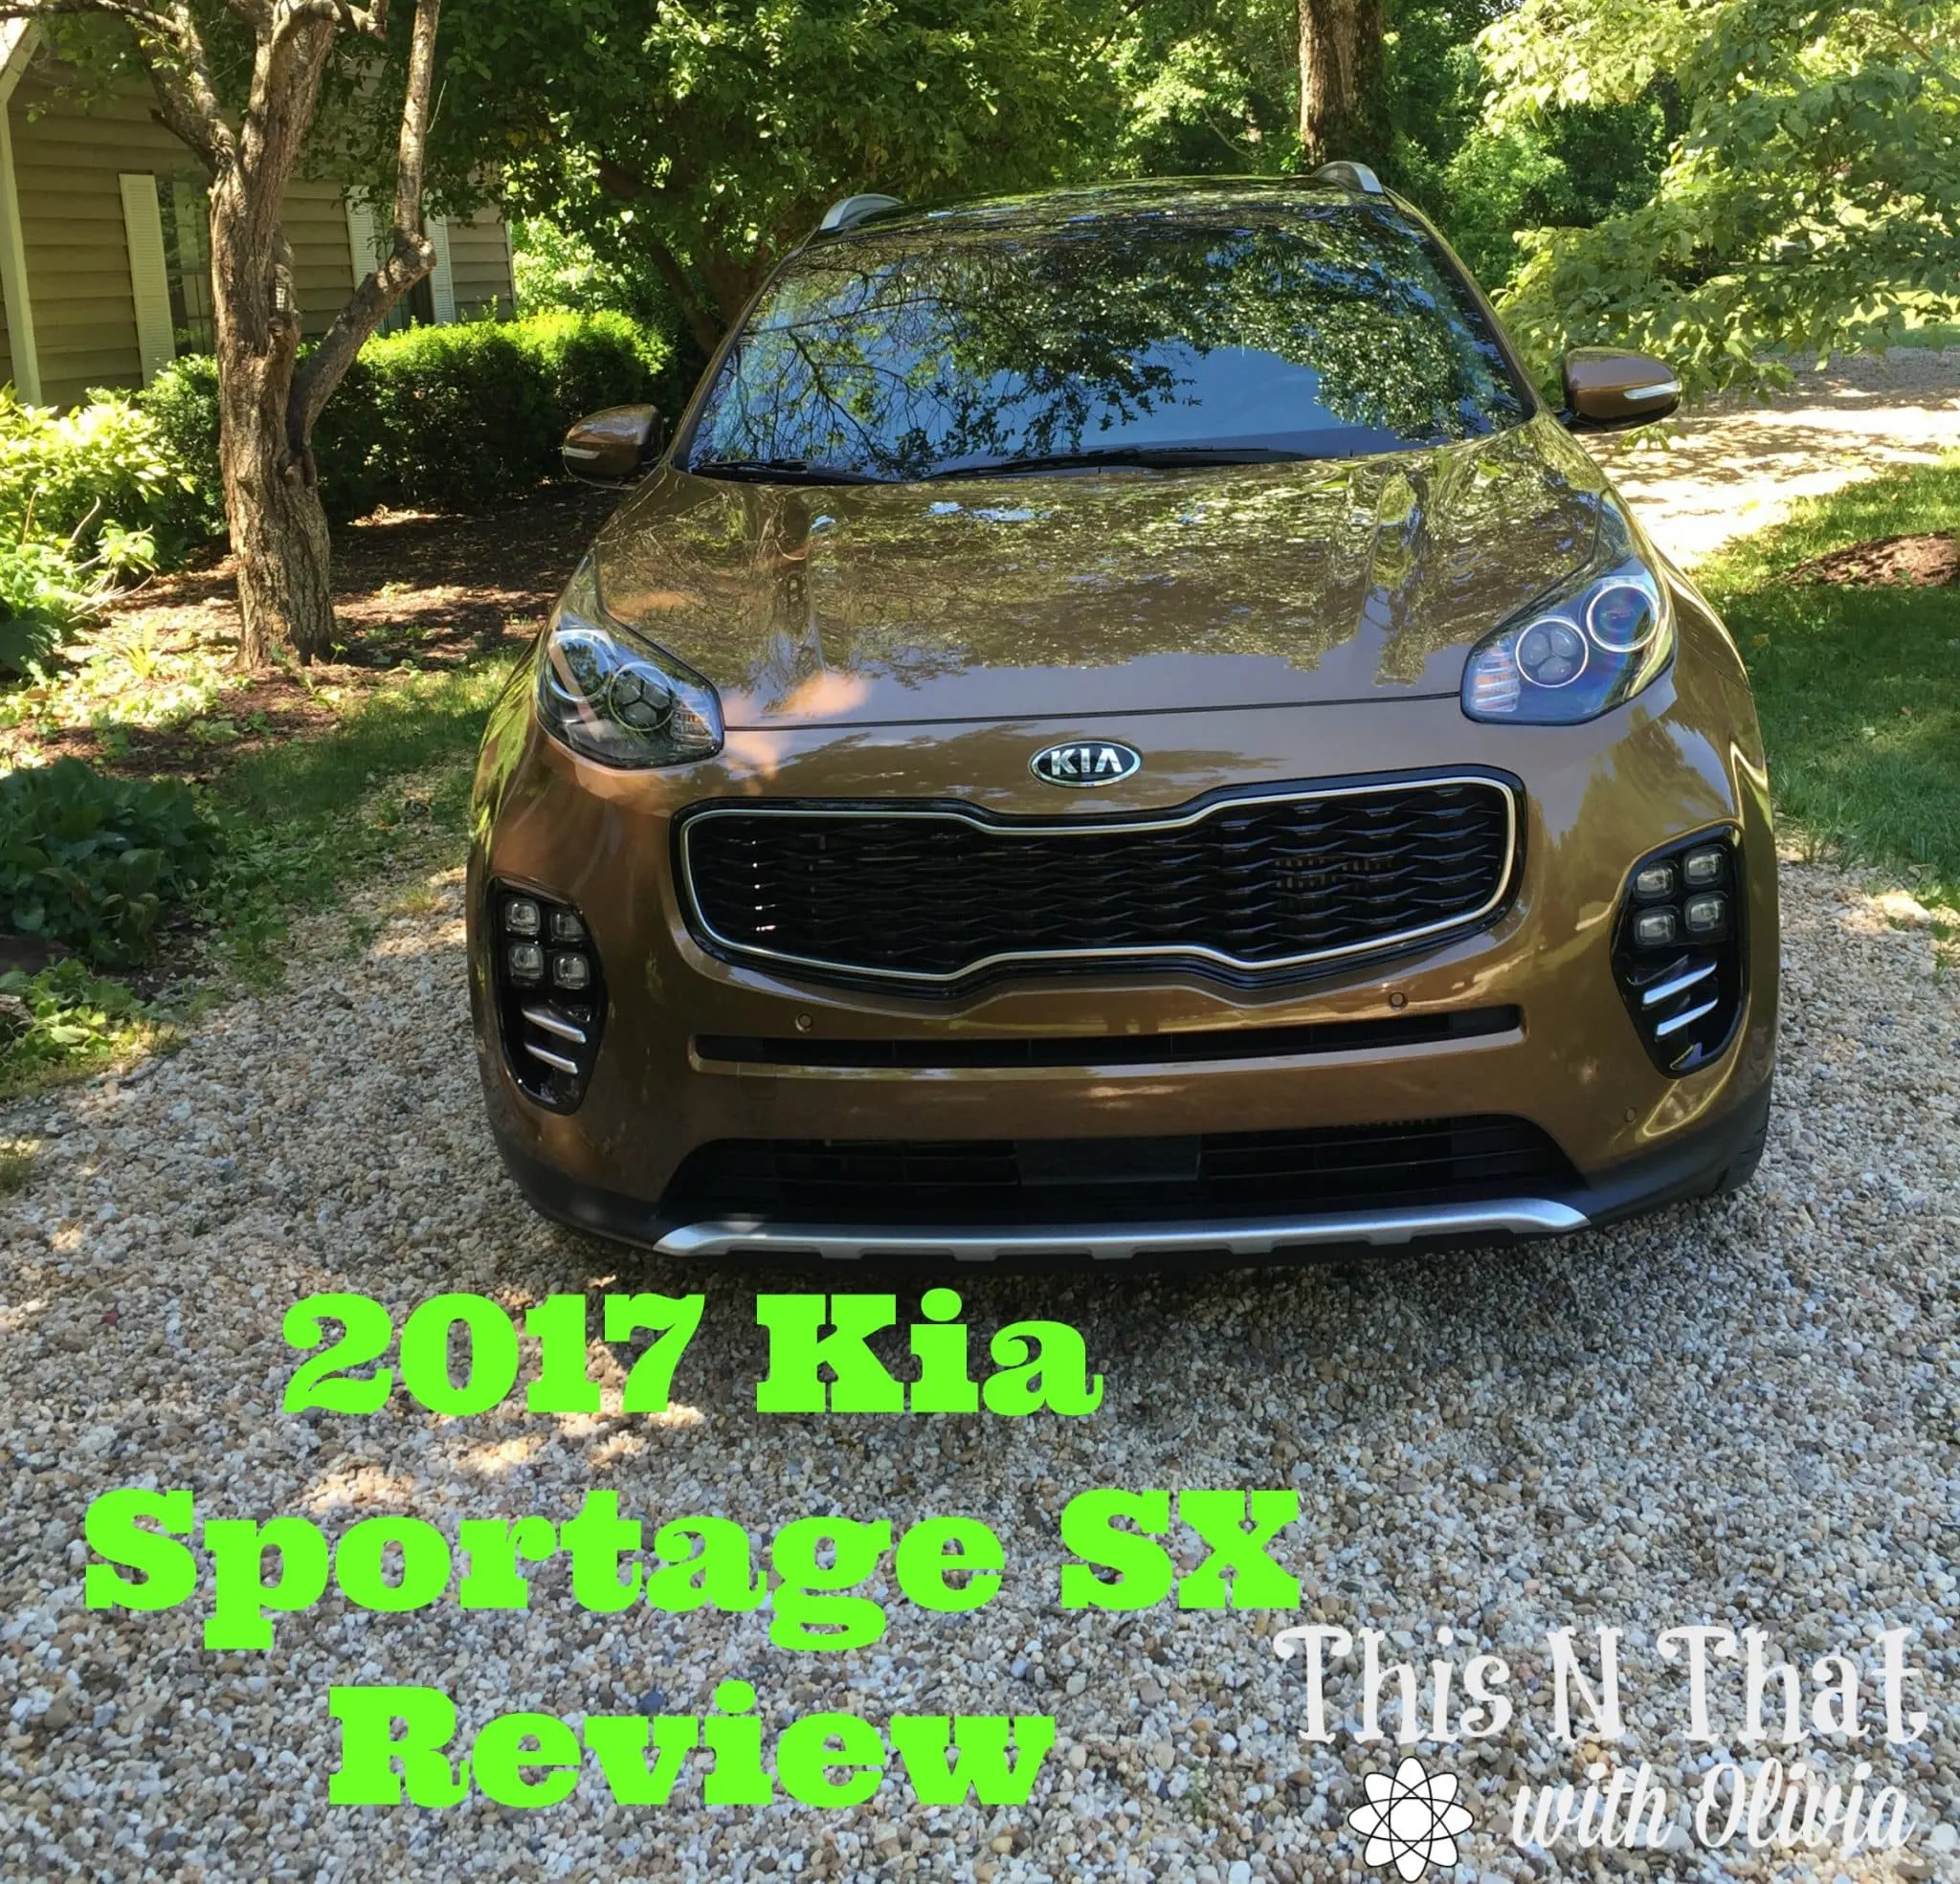 2017 Kia Sportage SX Review #DriveKia @Kia_Motors